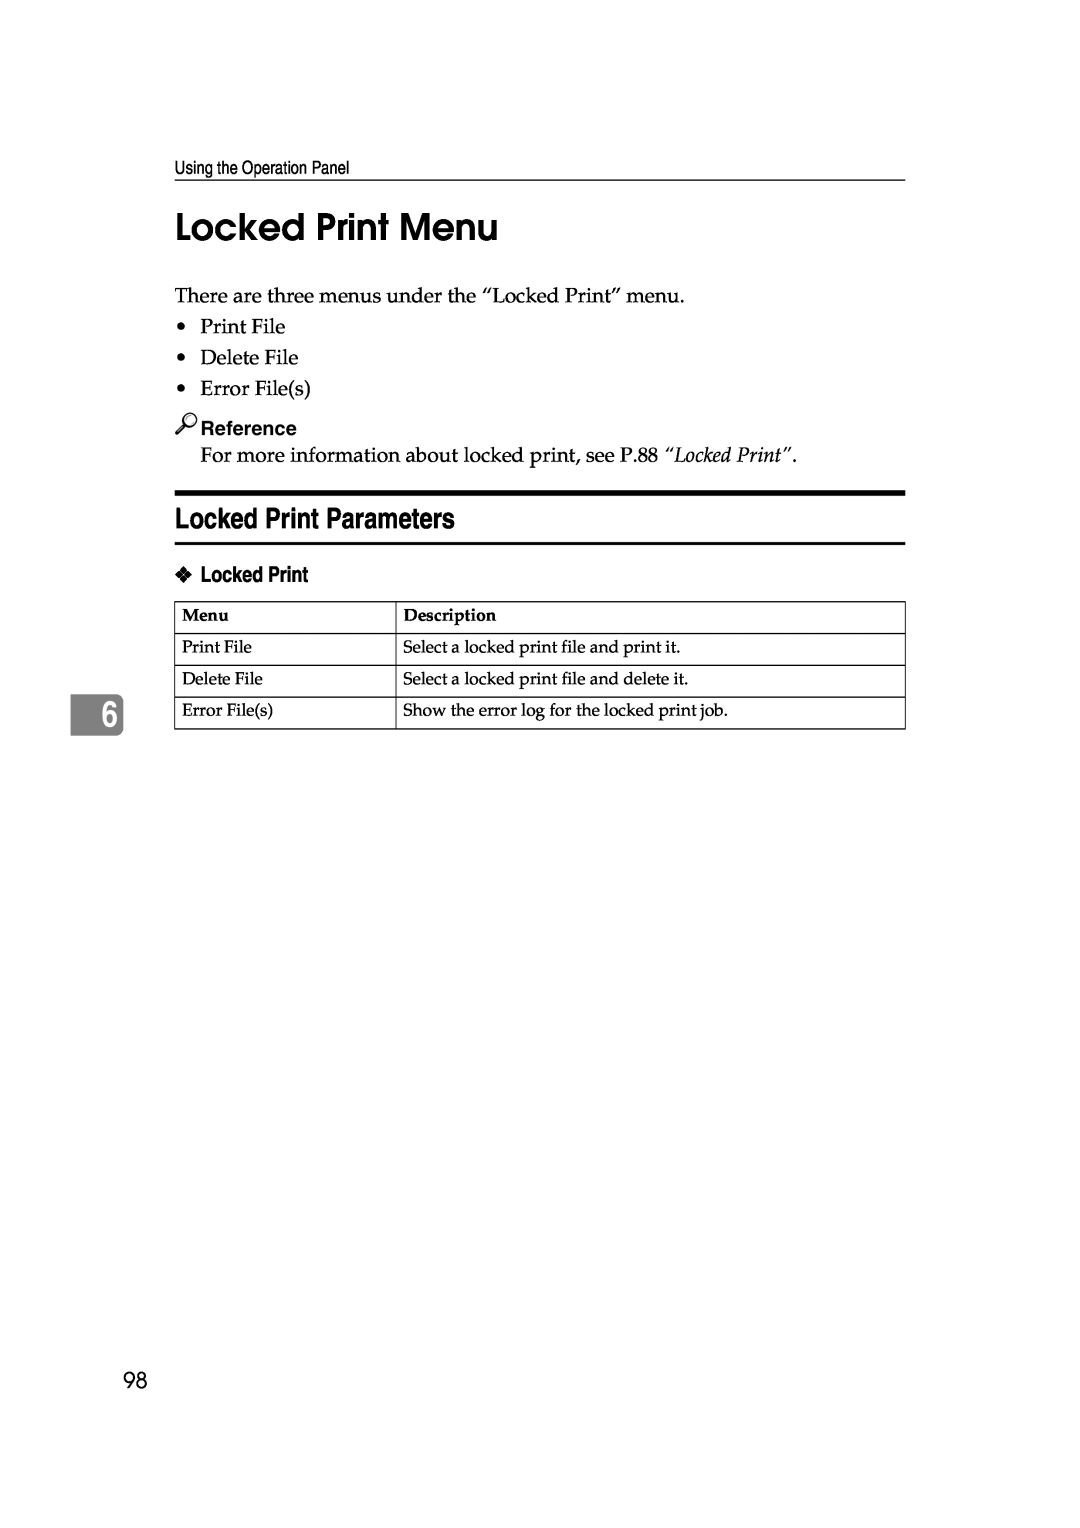 Lanier AP3200 manual Locked Print Menu, Locked Print Parameters 